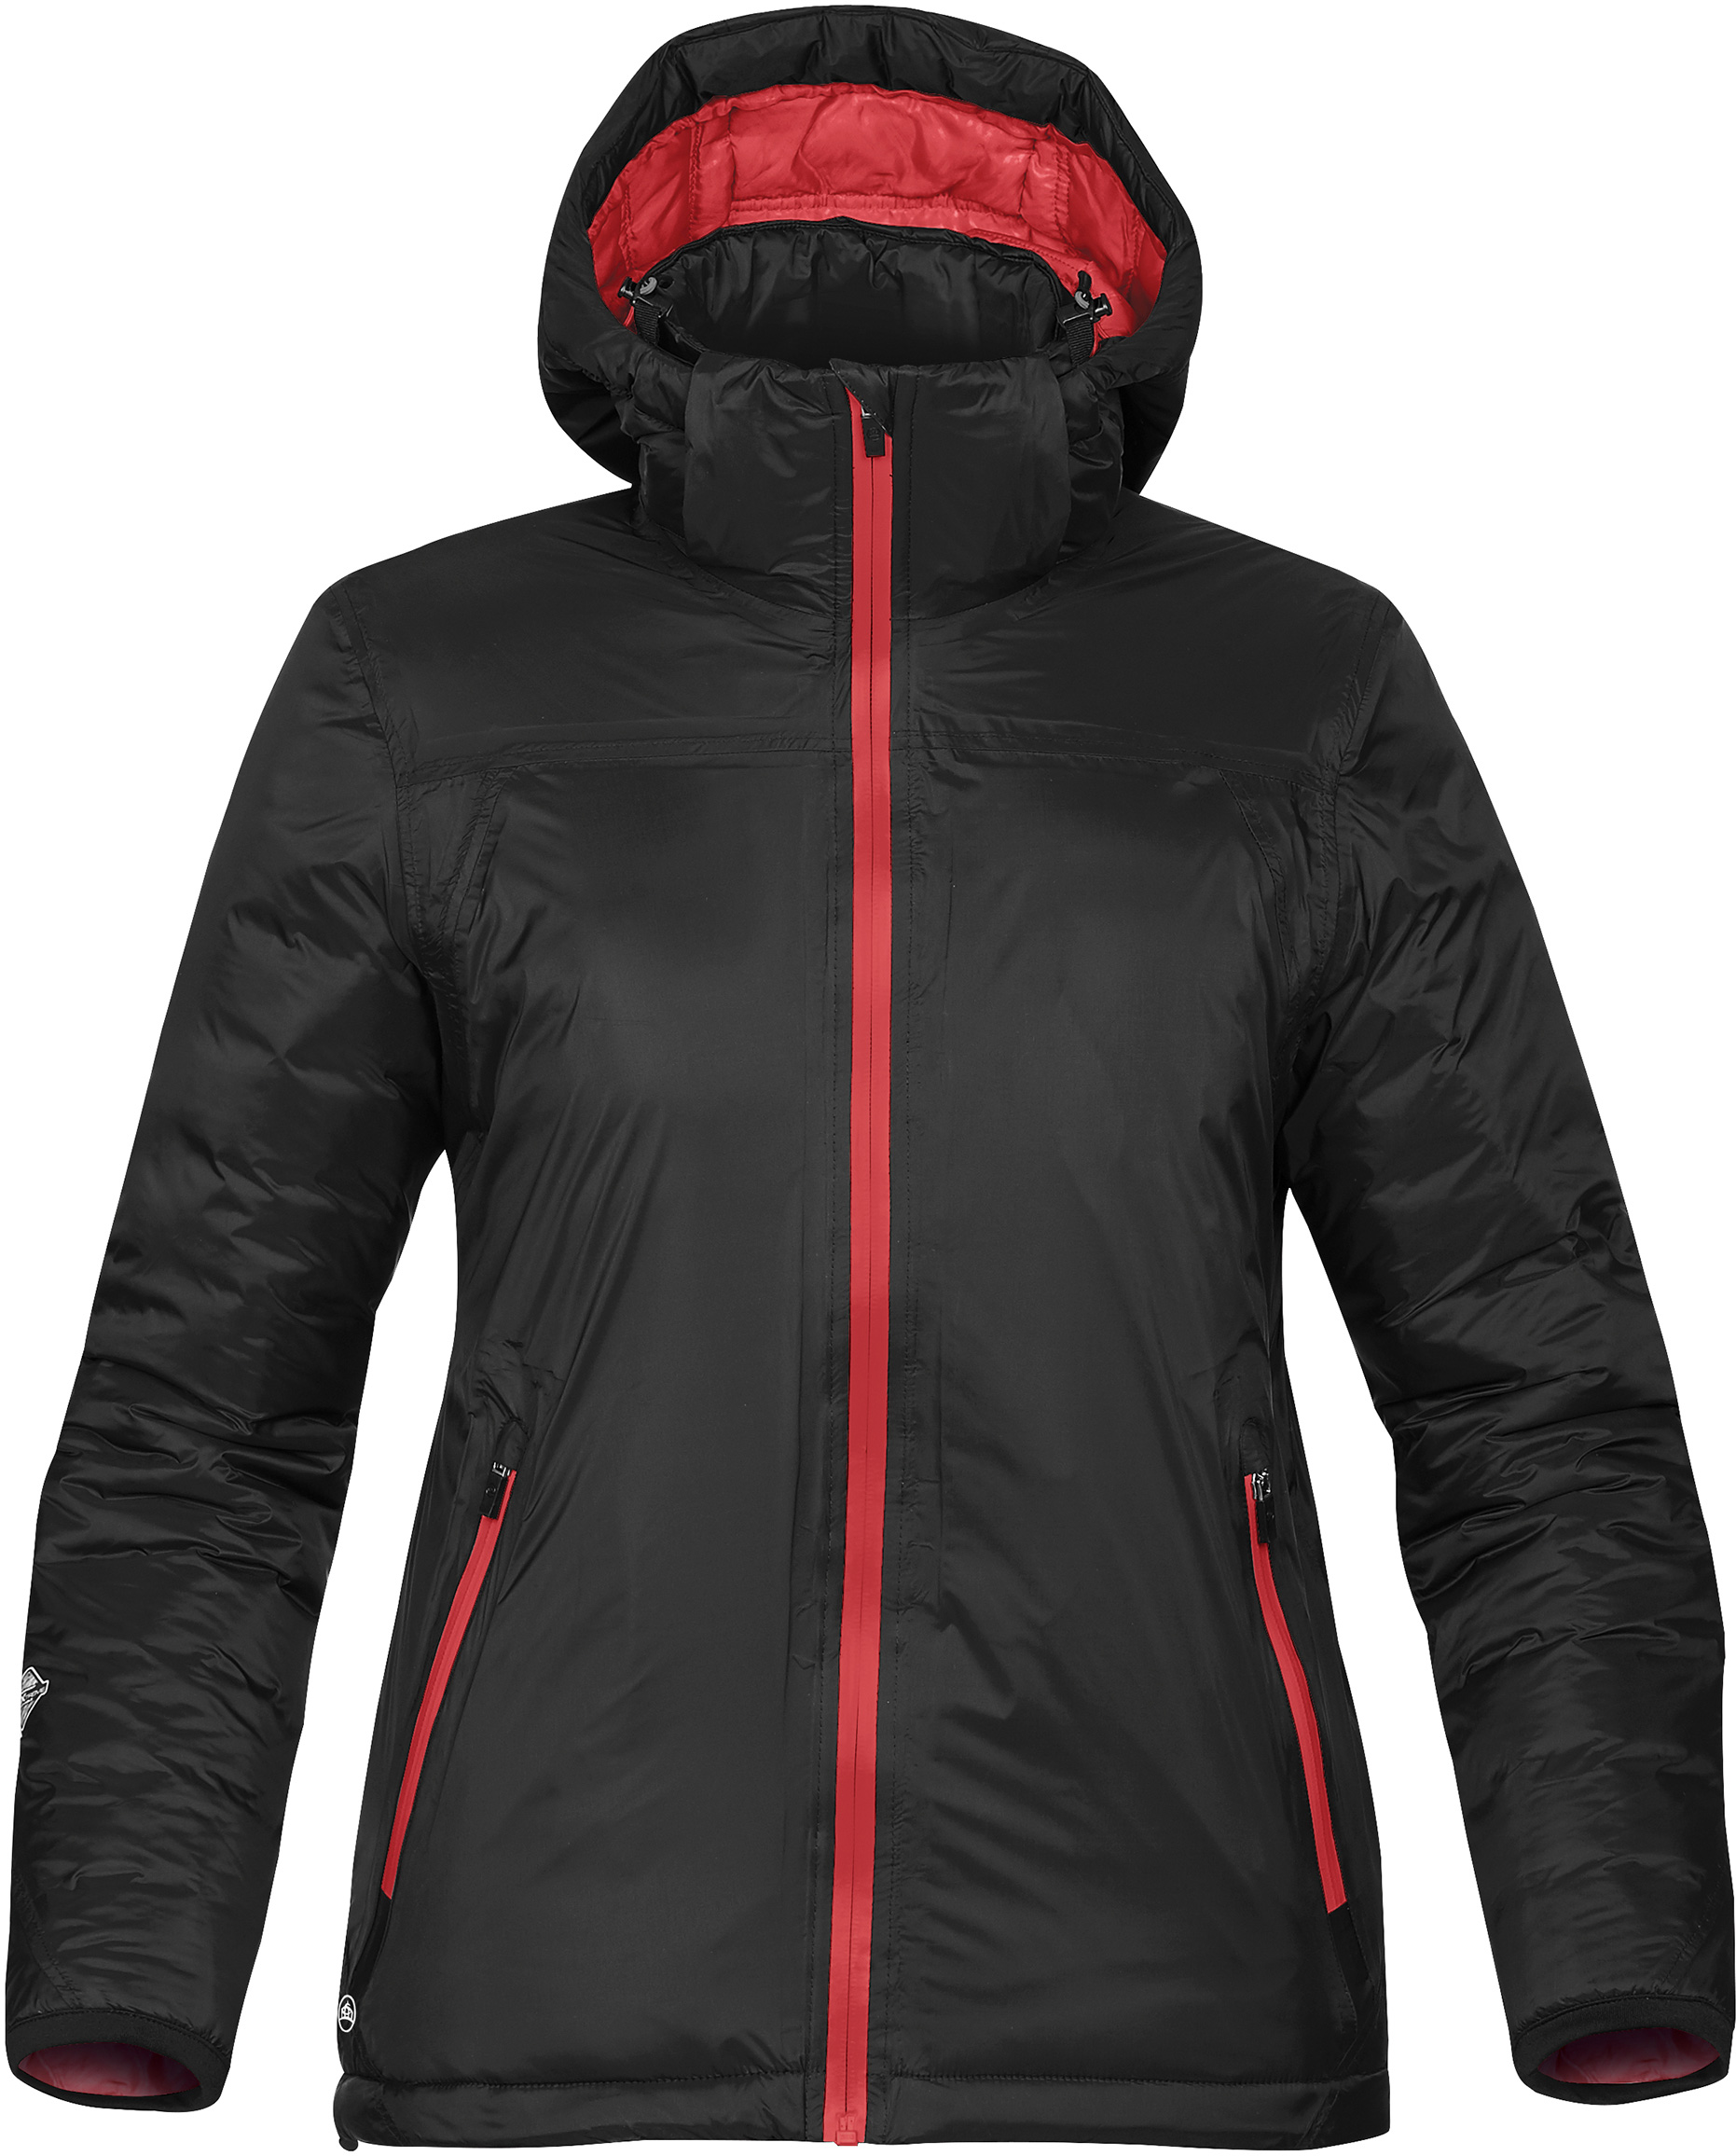 Stormtech X-1W - Women's Black Ice Thermal Jacket